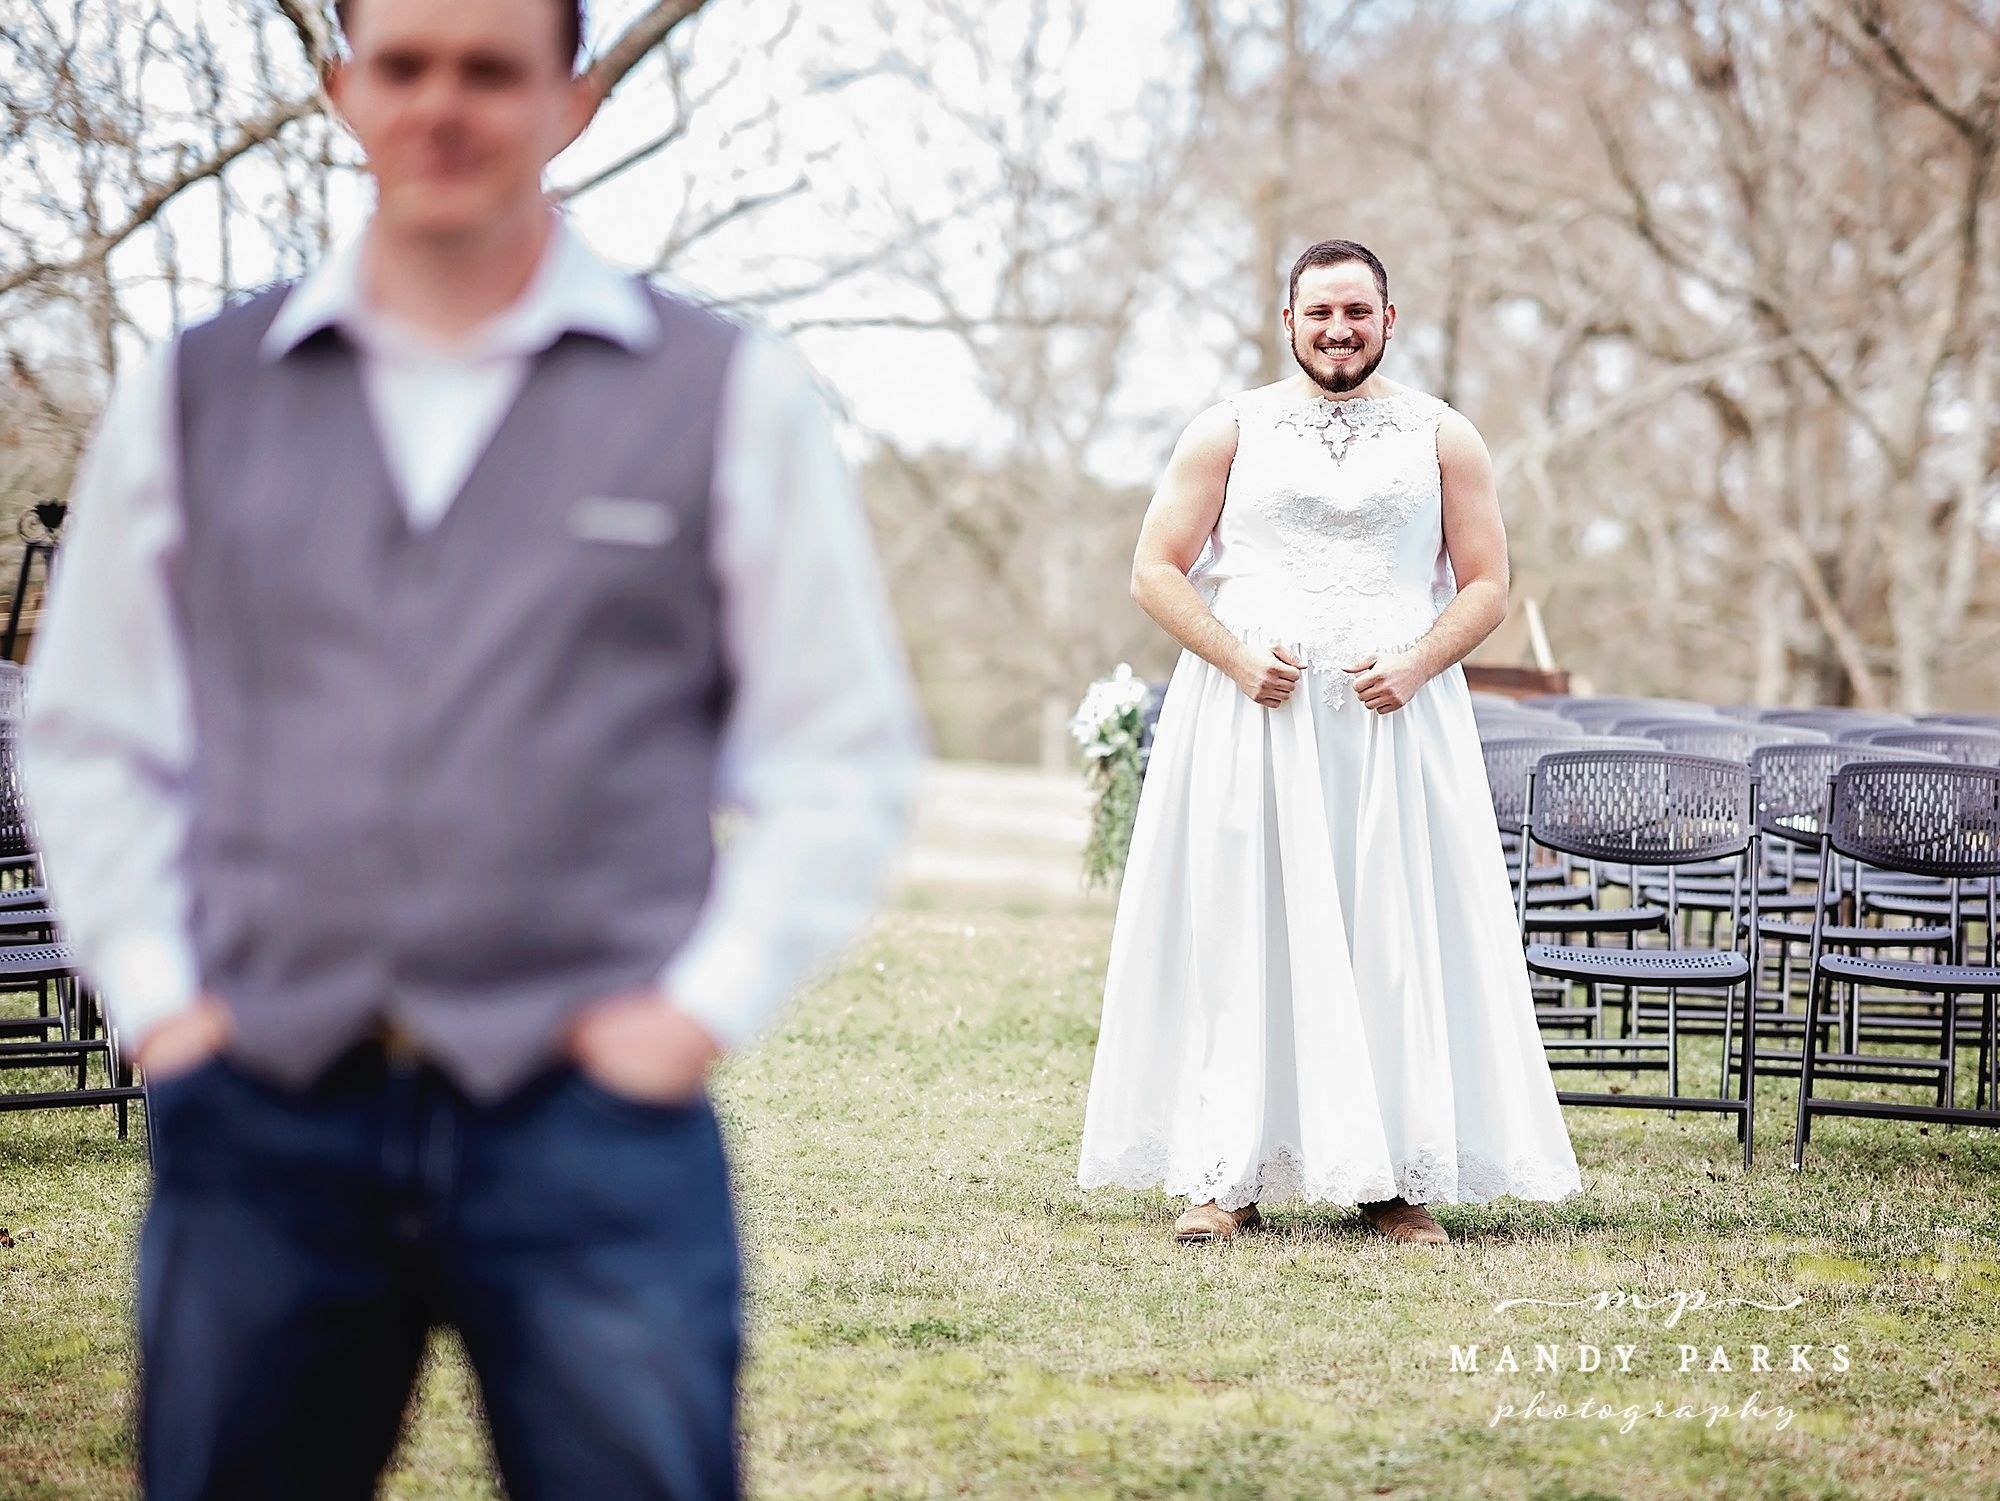 Oklahoma groom turns around to unexpected sight during prank